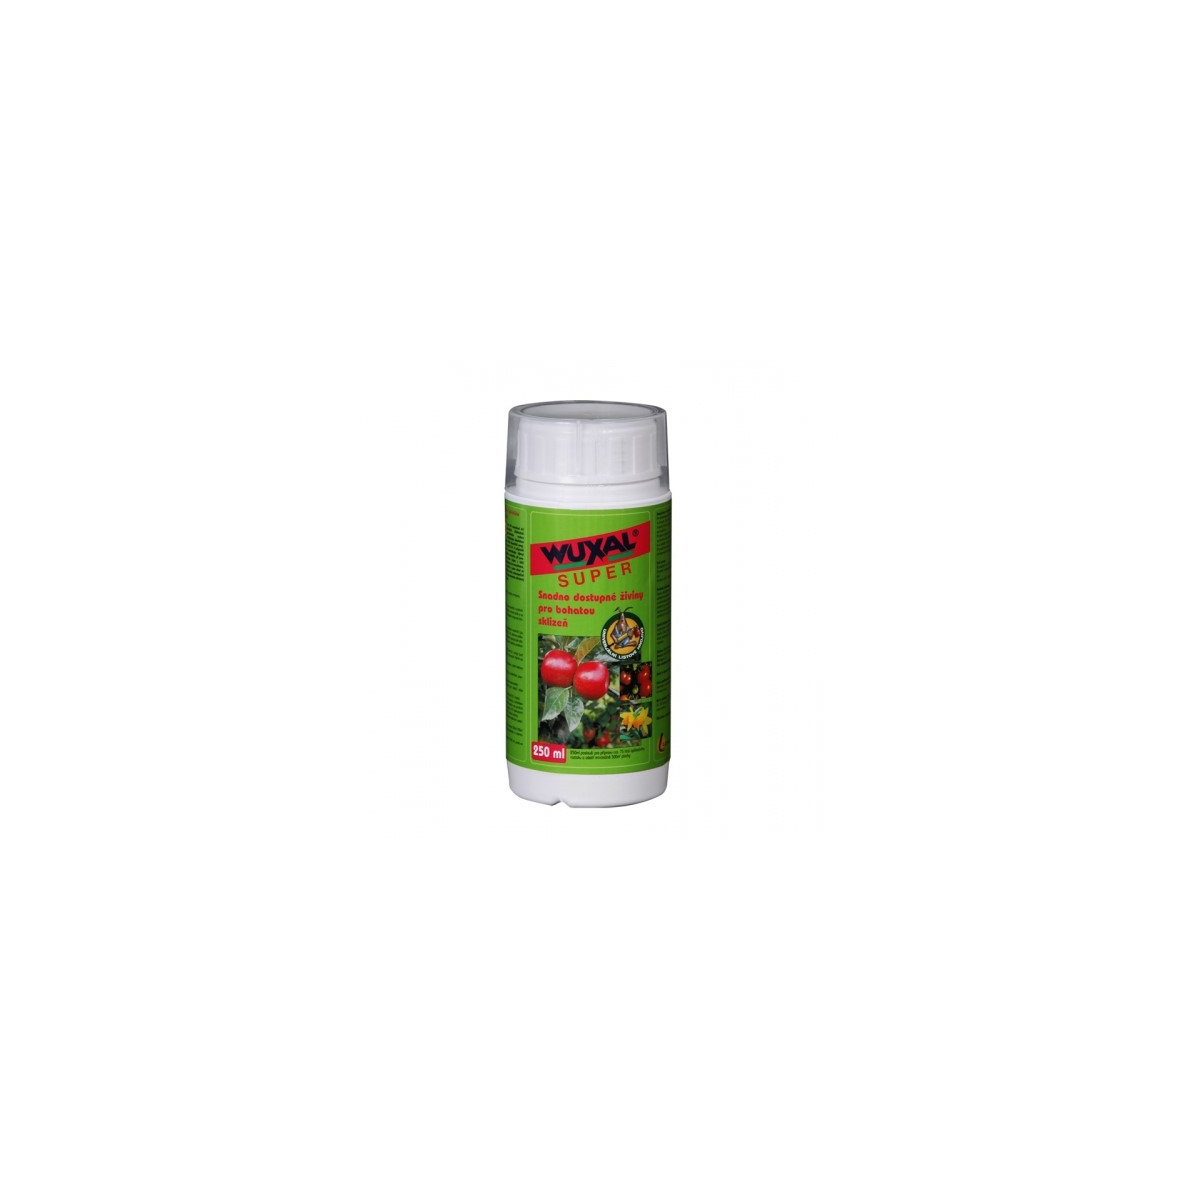 Wuxal super - Lovela - tekuté hnojivo - 250 ml